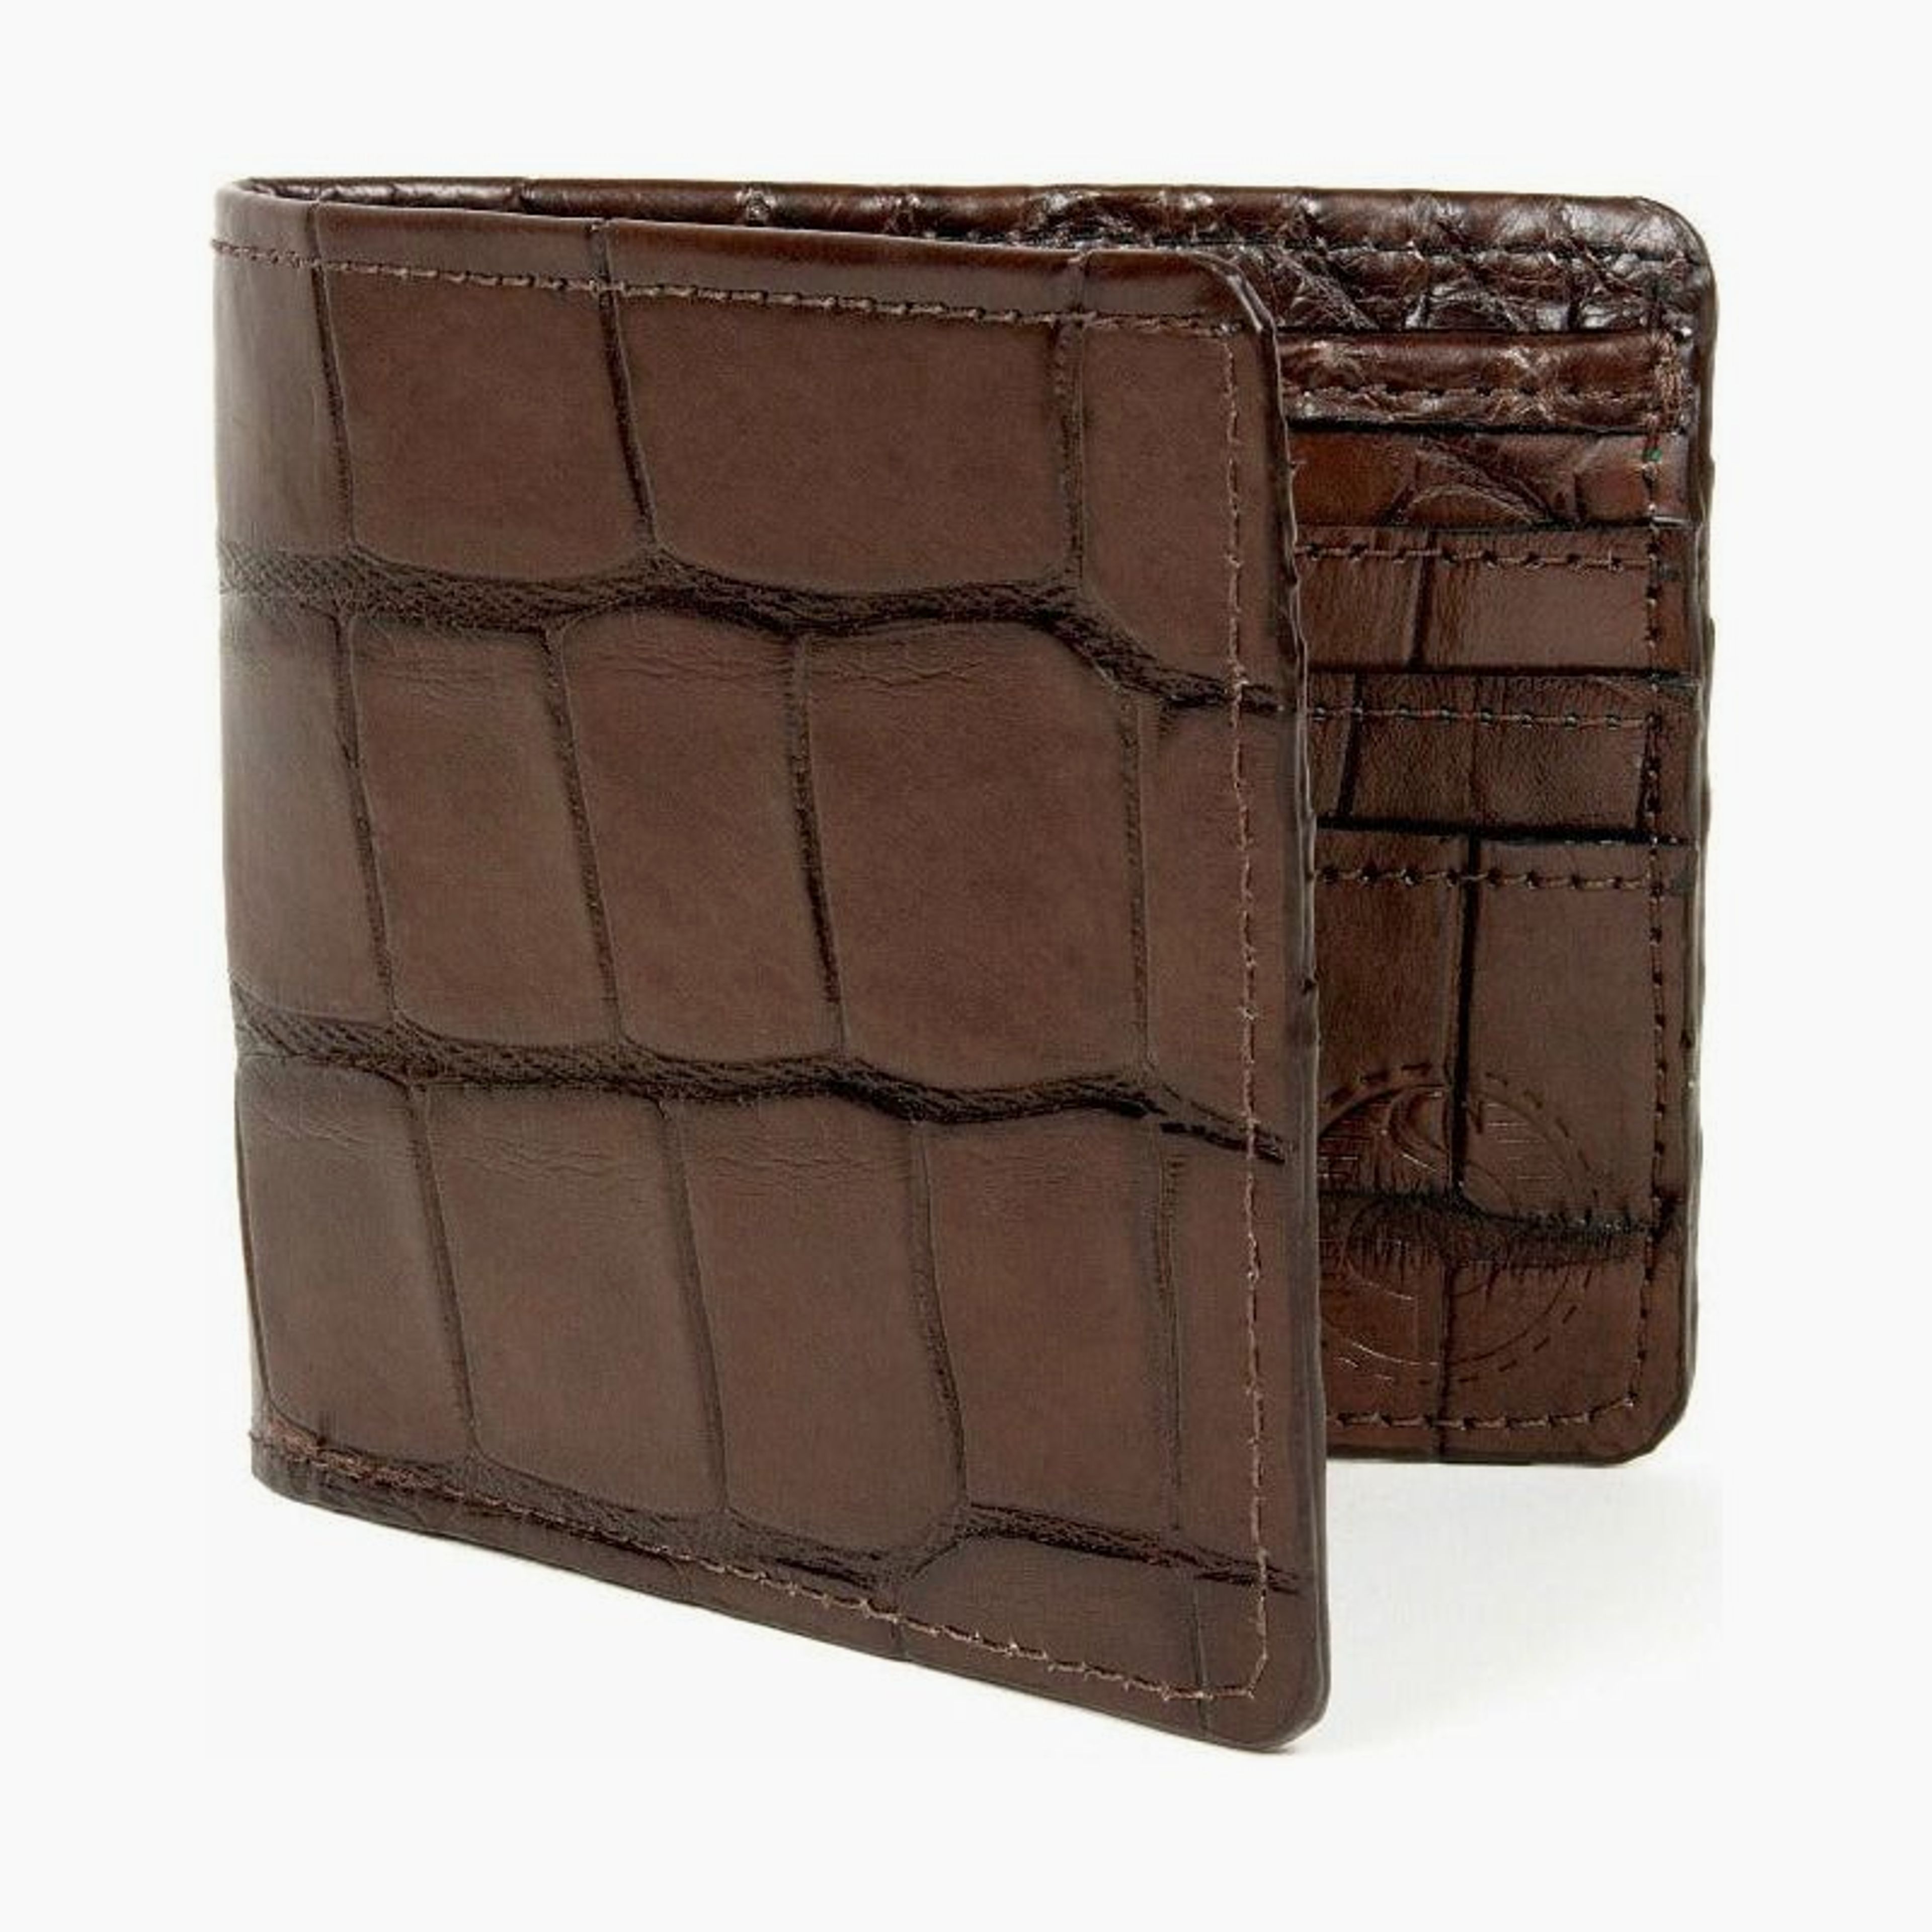 "The Captain" Chocolate Alligator Skin Wallet